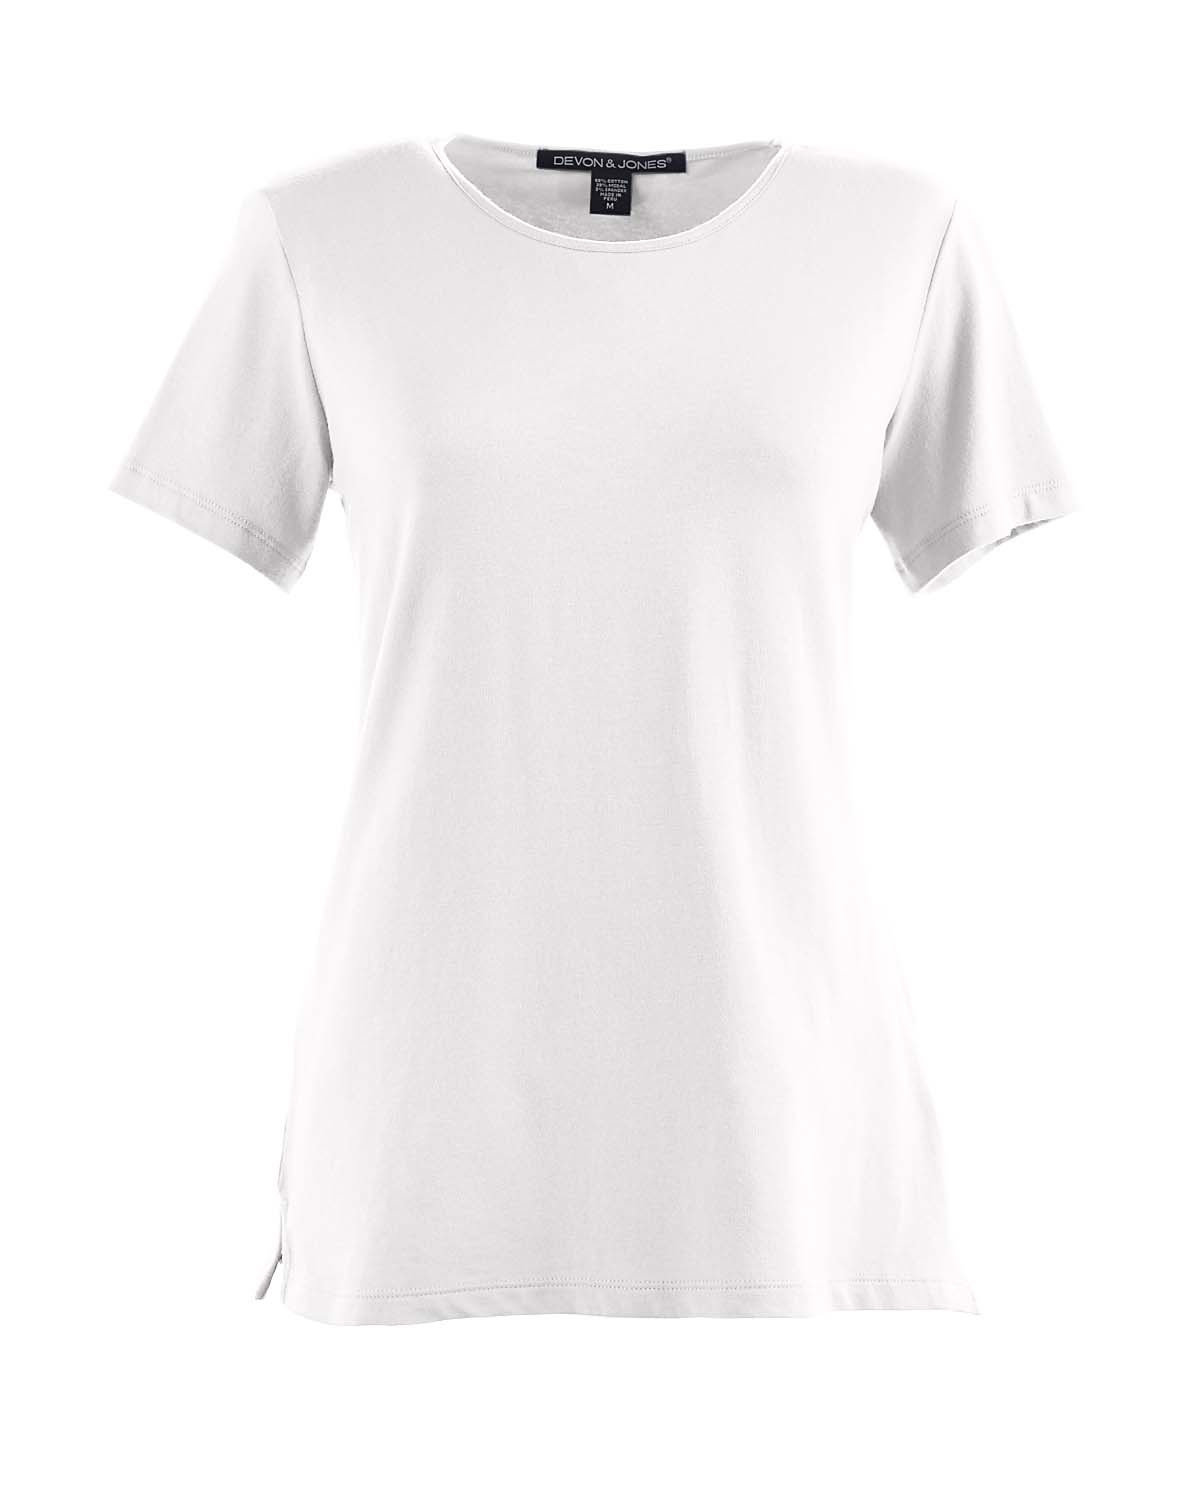 Picture of Devon & Jones Women's Perfect Fit™ Shell T-Shirt